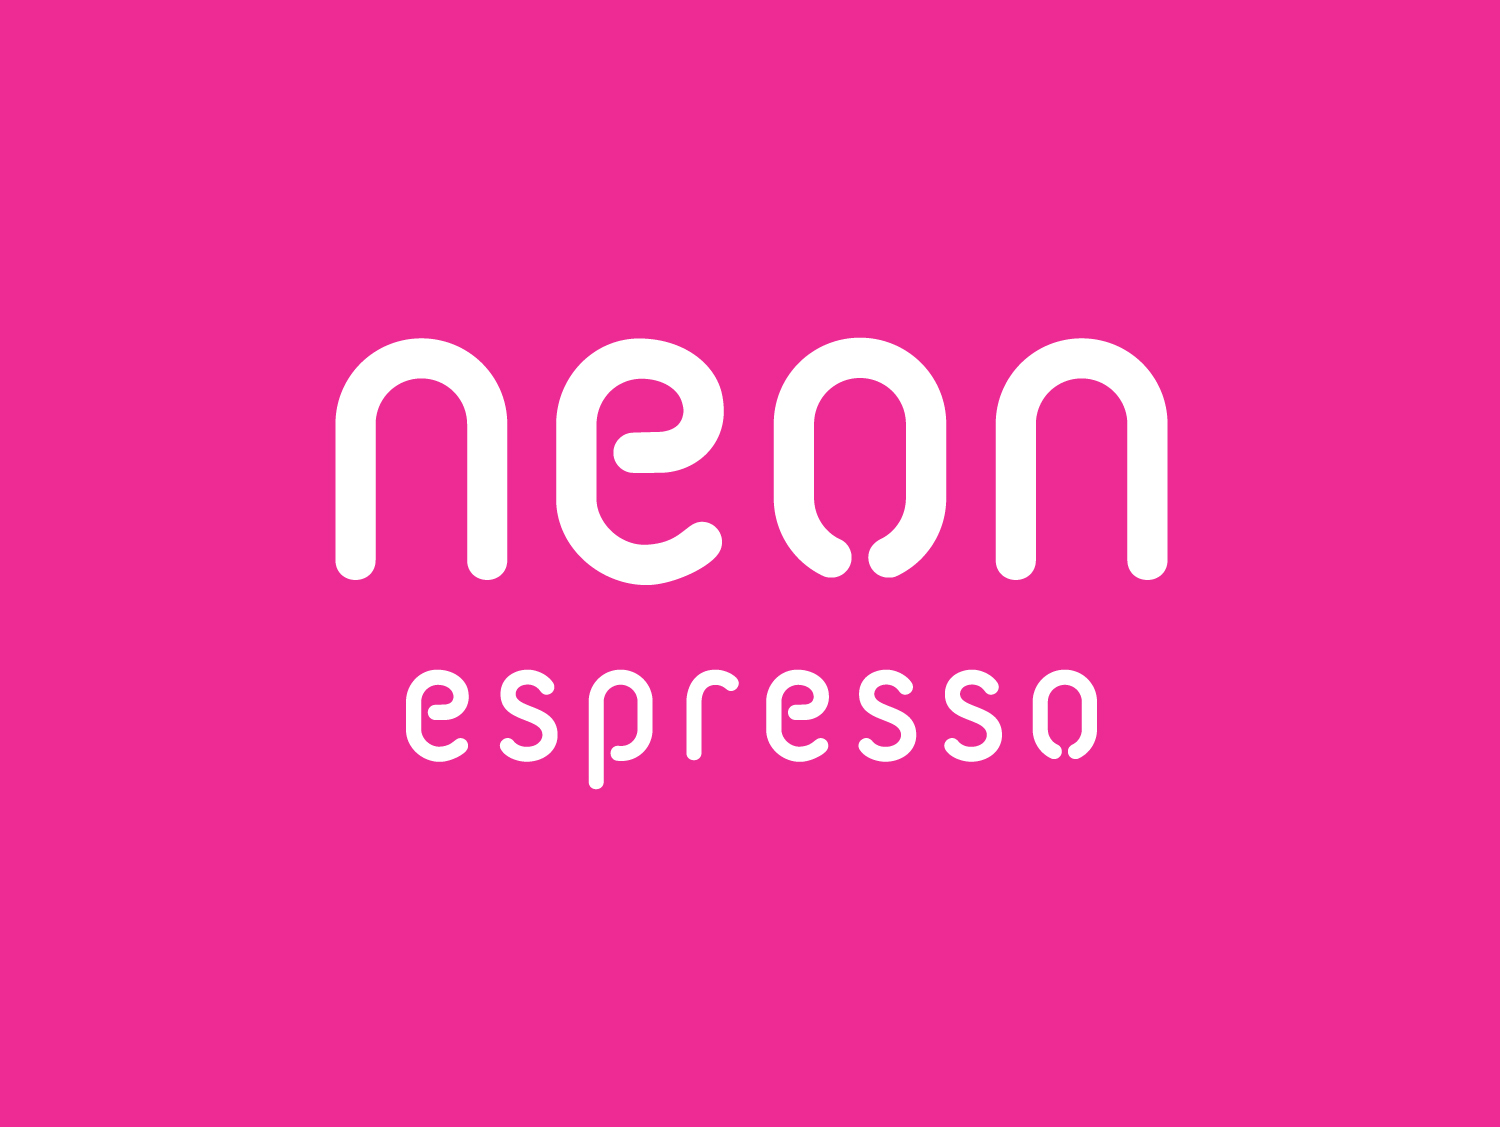 Neon-Espresso-logo-03.jpg